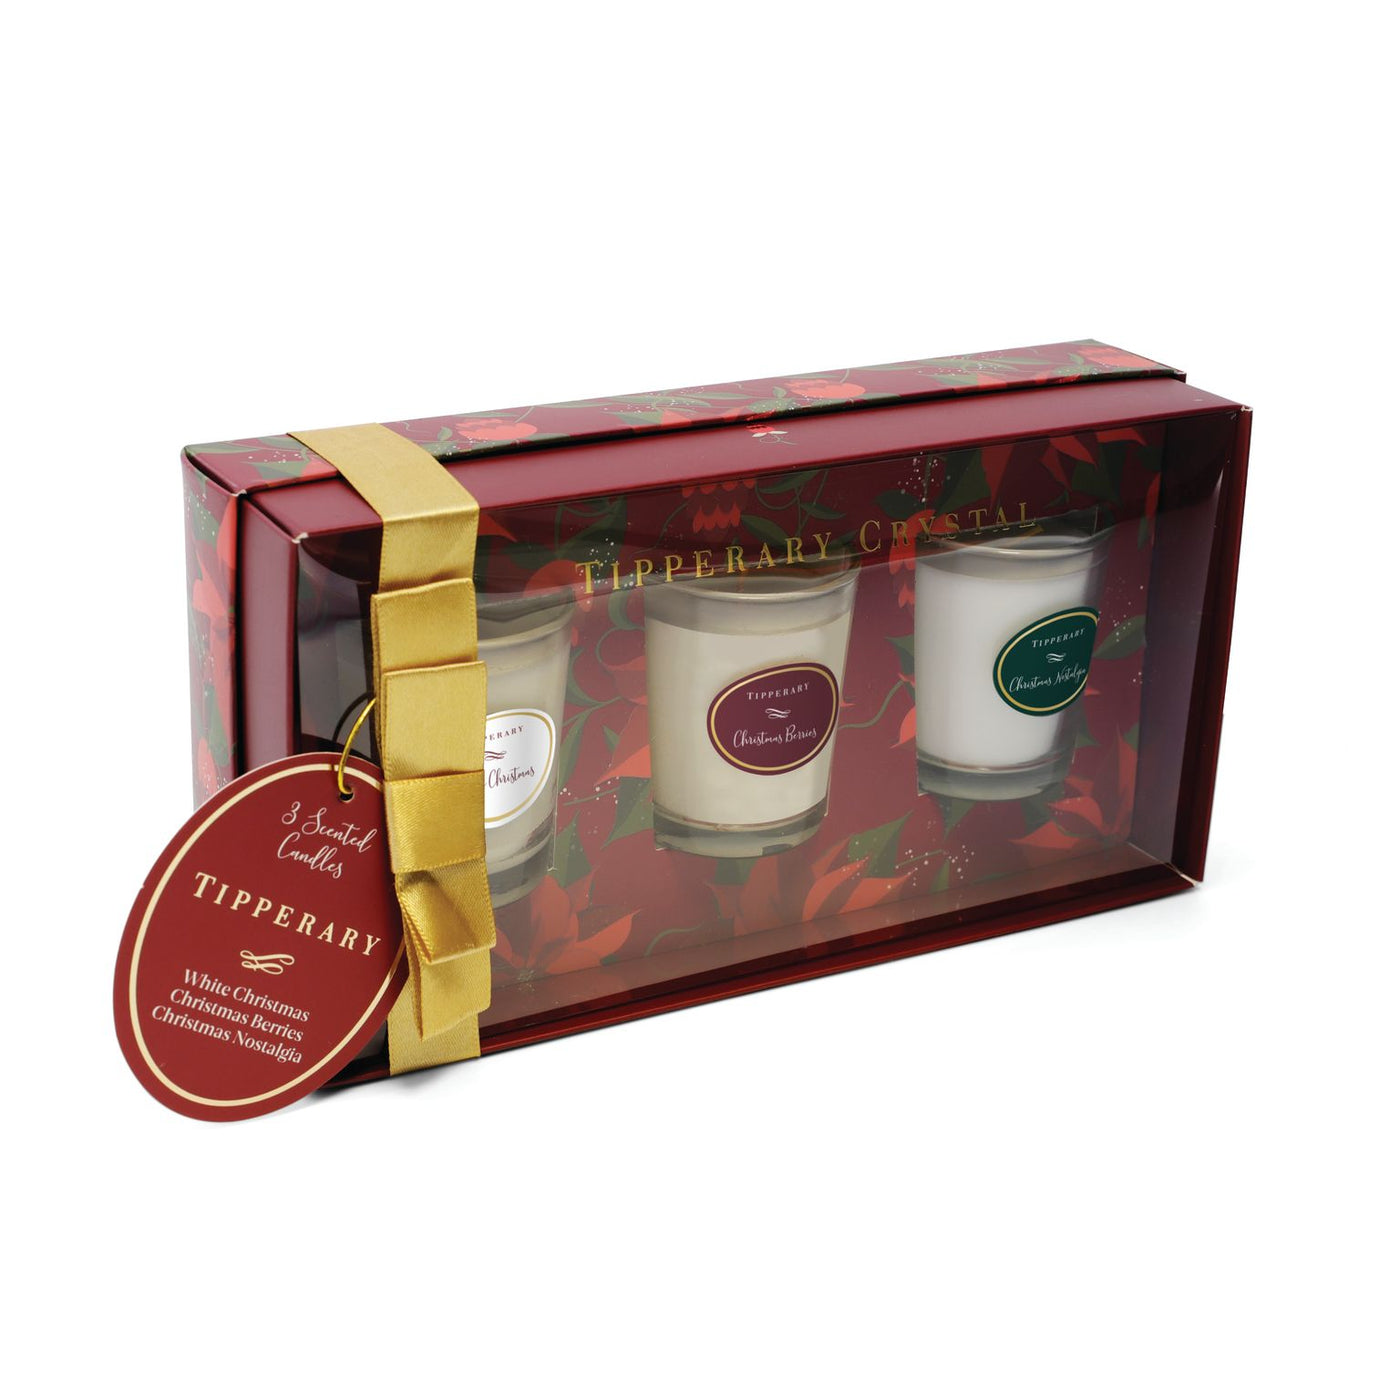 Tipperary Crystal Poinsettia Set of 3 Mini Candle Gift Box - White Christmas, Christmas Berries & Christmas Nostalgia